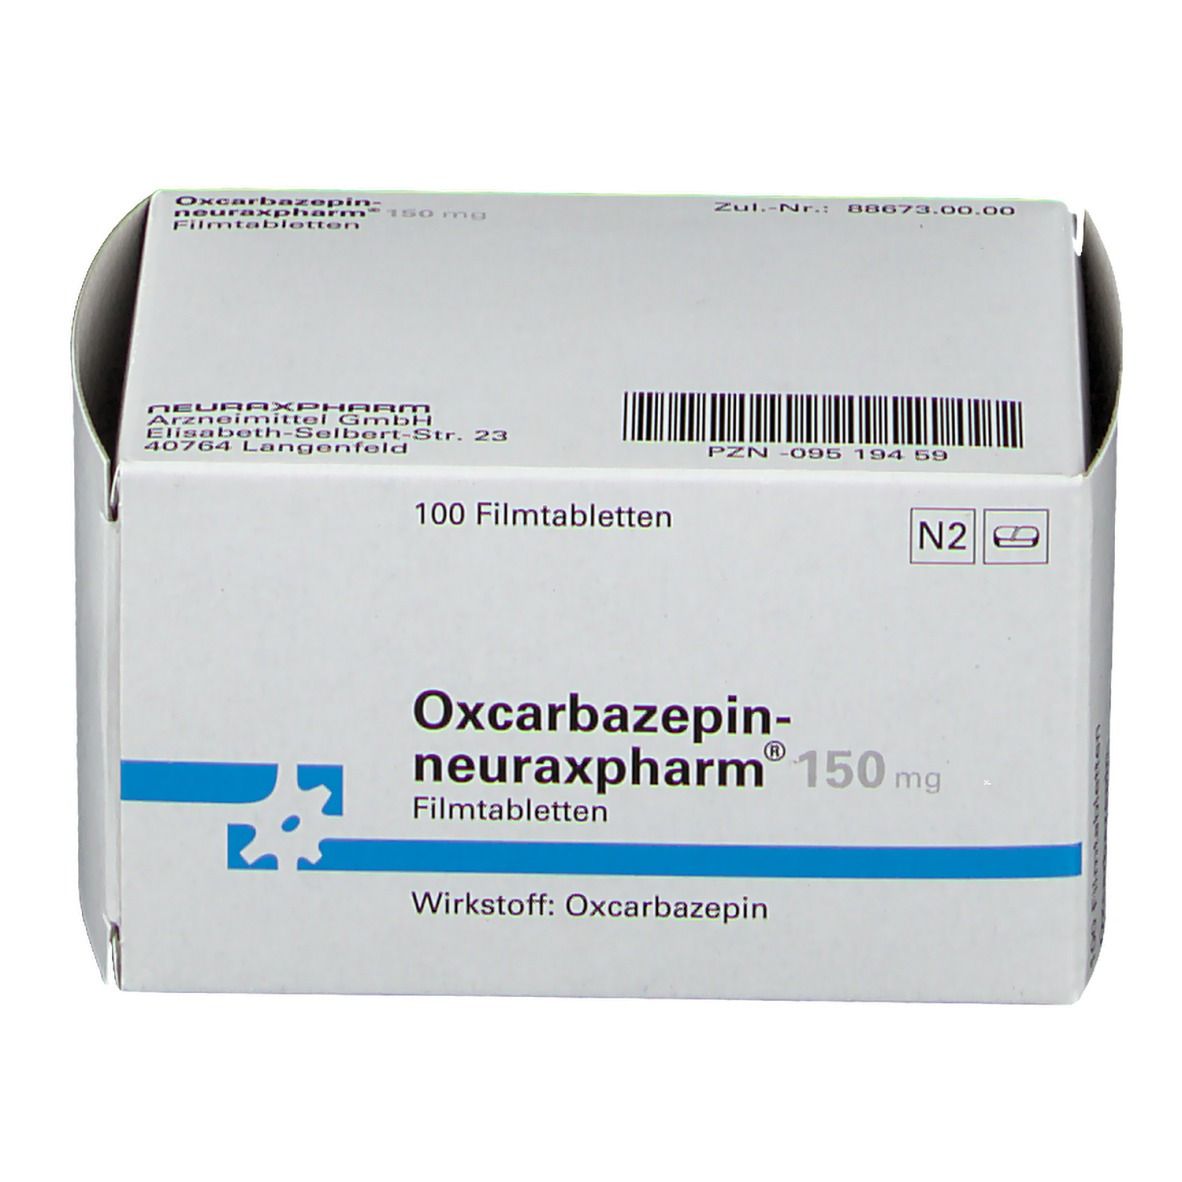 Oxcarbazepin-neuraxpharm® 150 mg